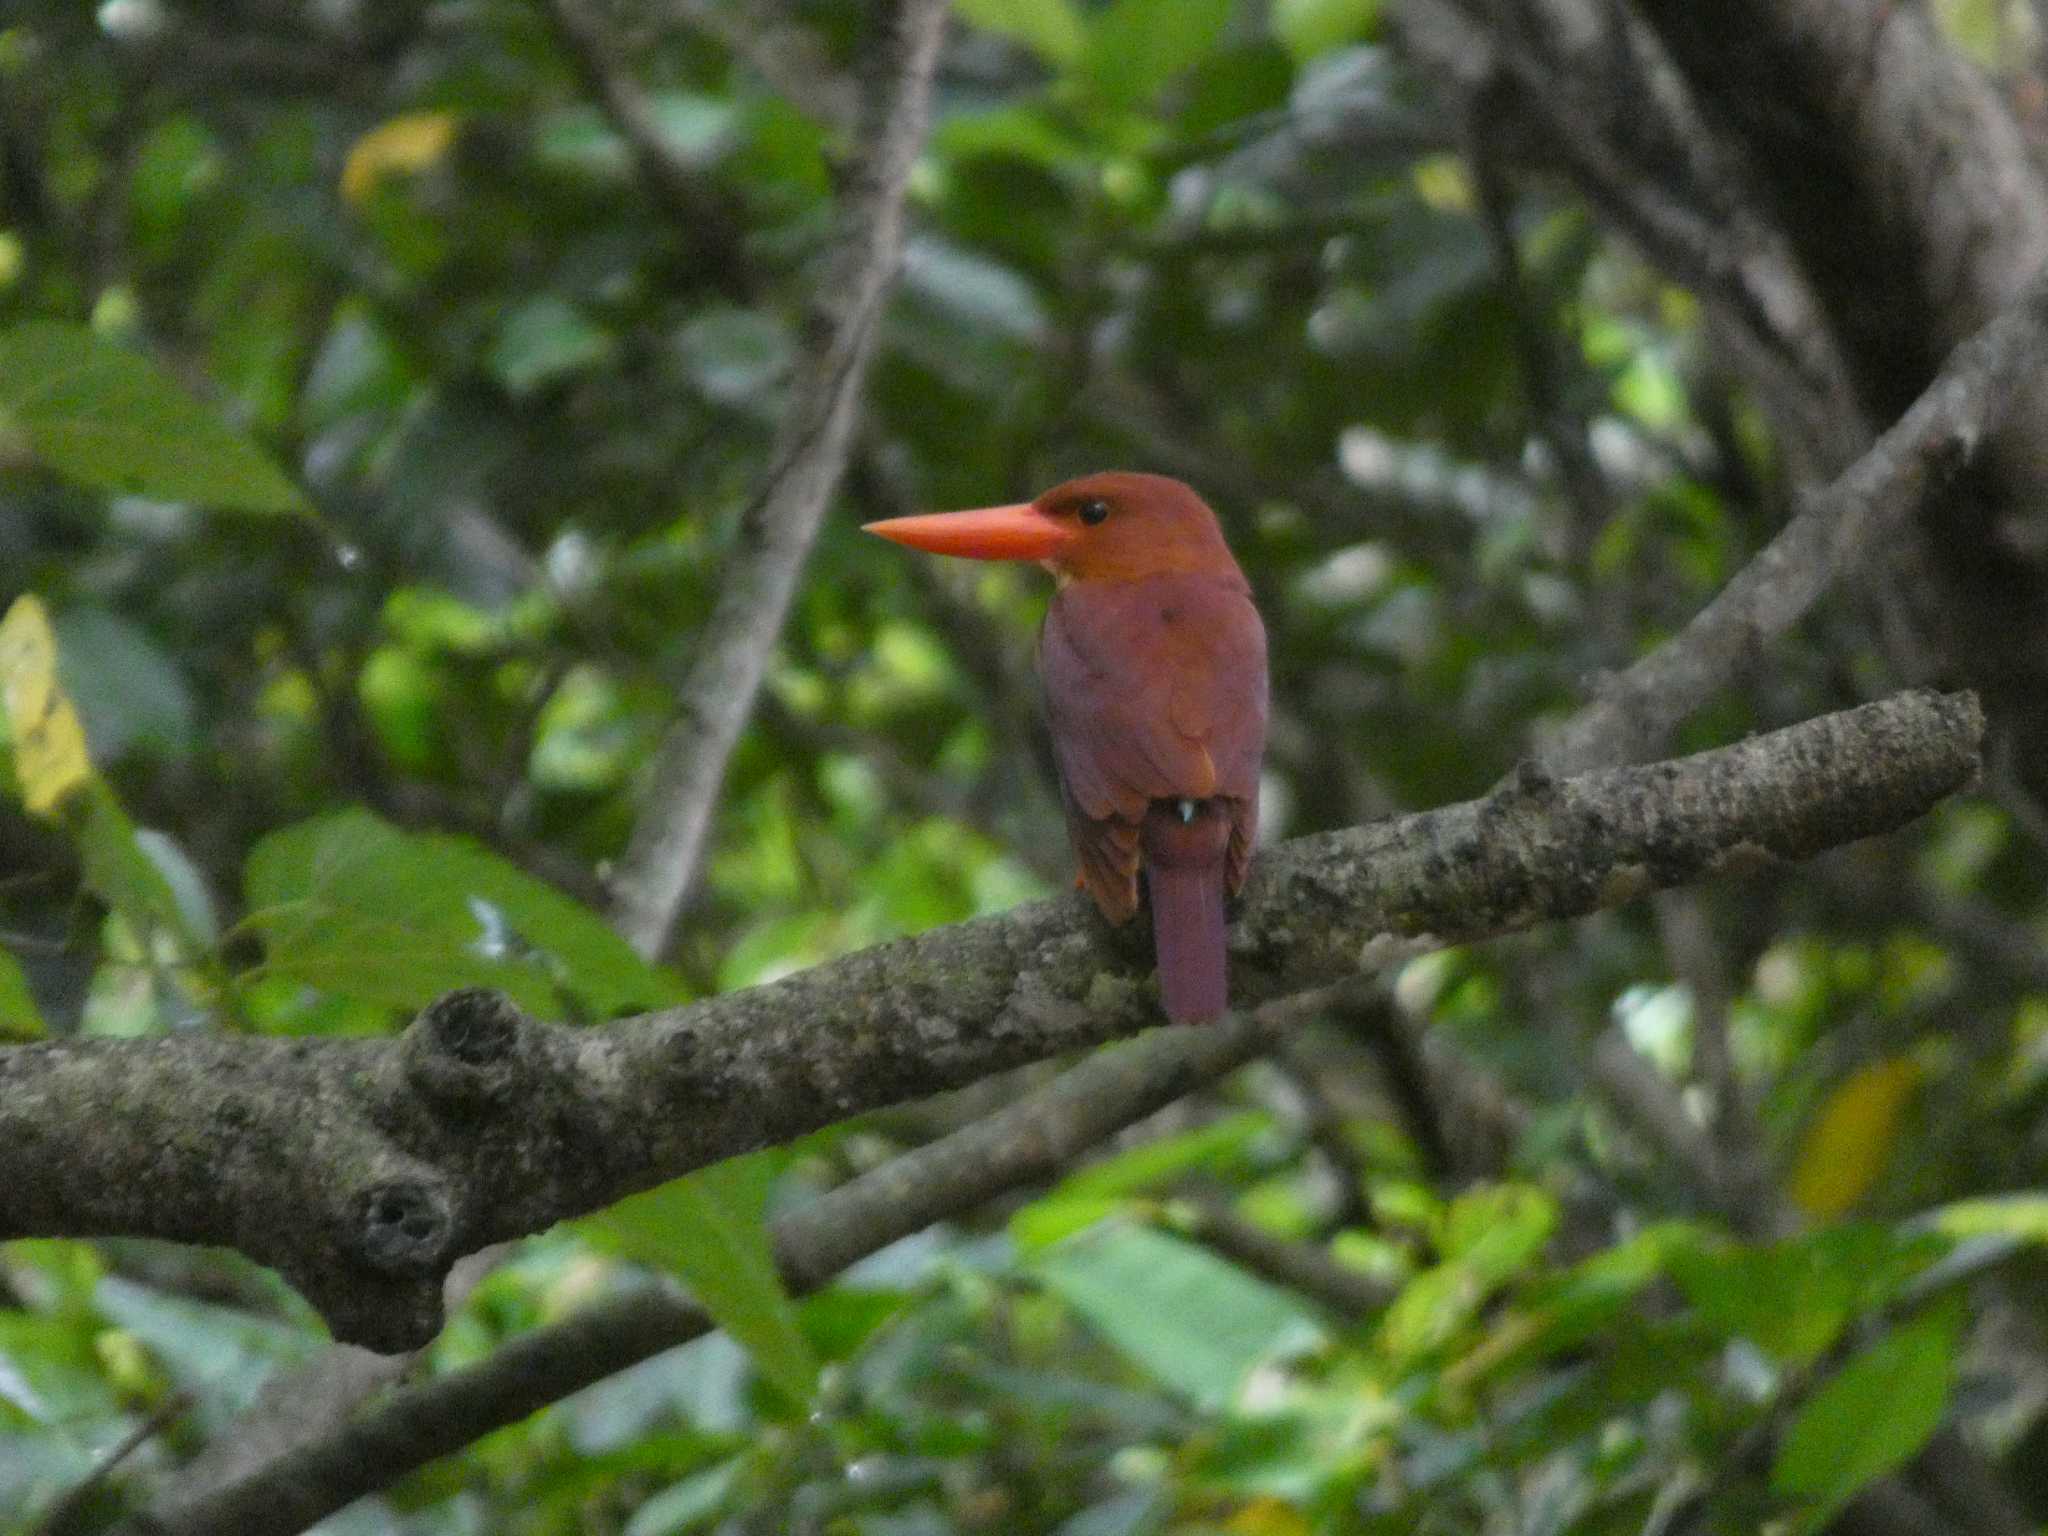 Photo of Ruddy Kingfisher(bangsi) at Ishigaki Island by 頭黒鴎